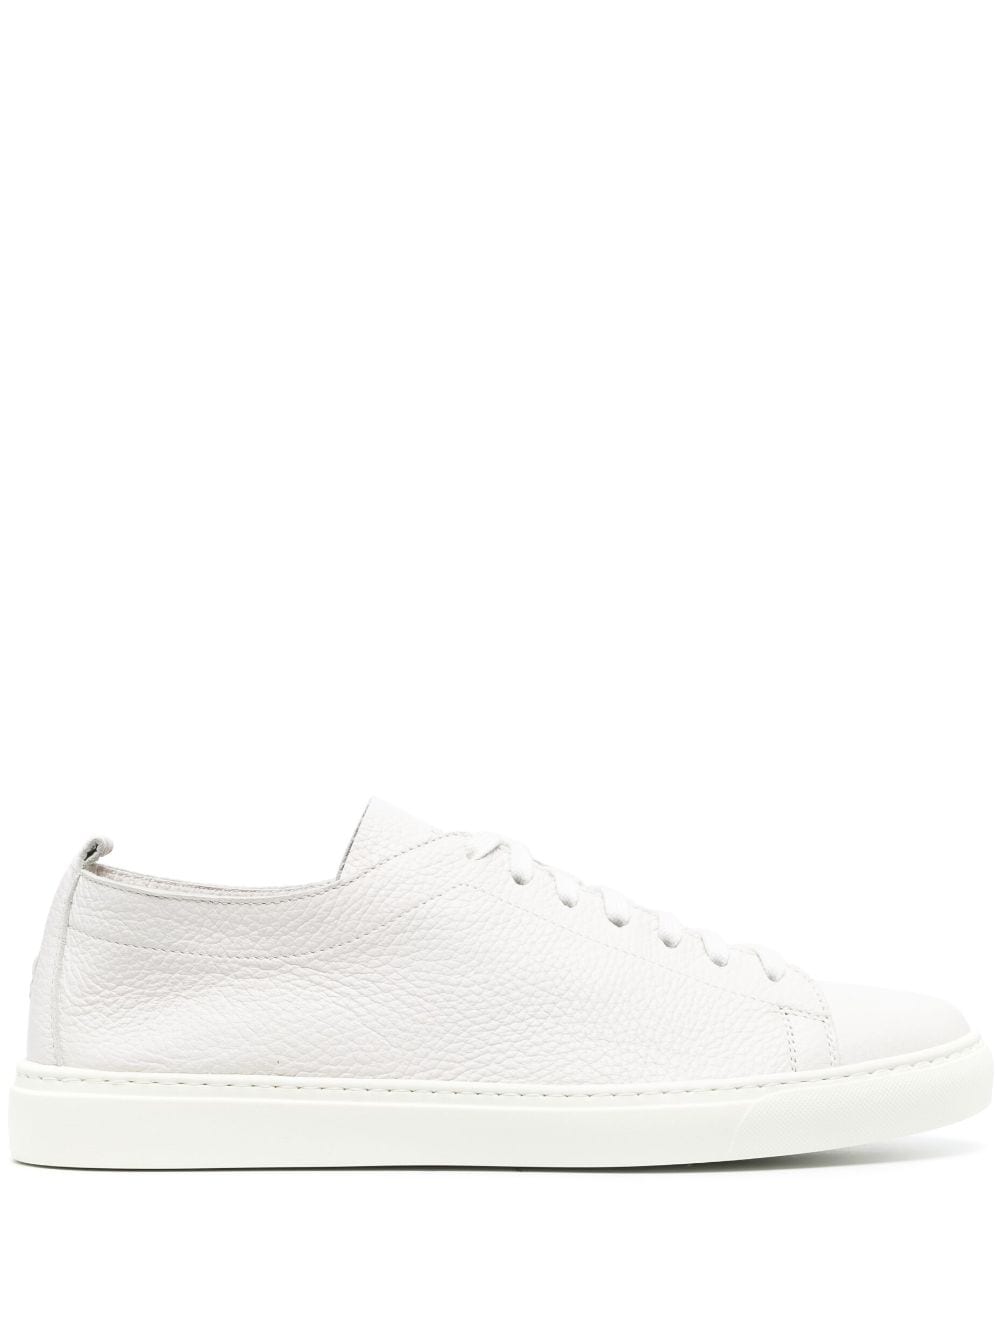 Henderson Baracco grained-texture low-top sneakers - White von Henderson Baracco